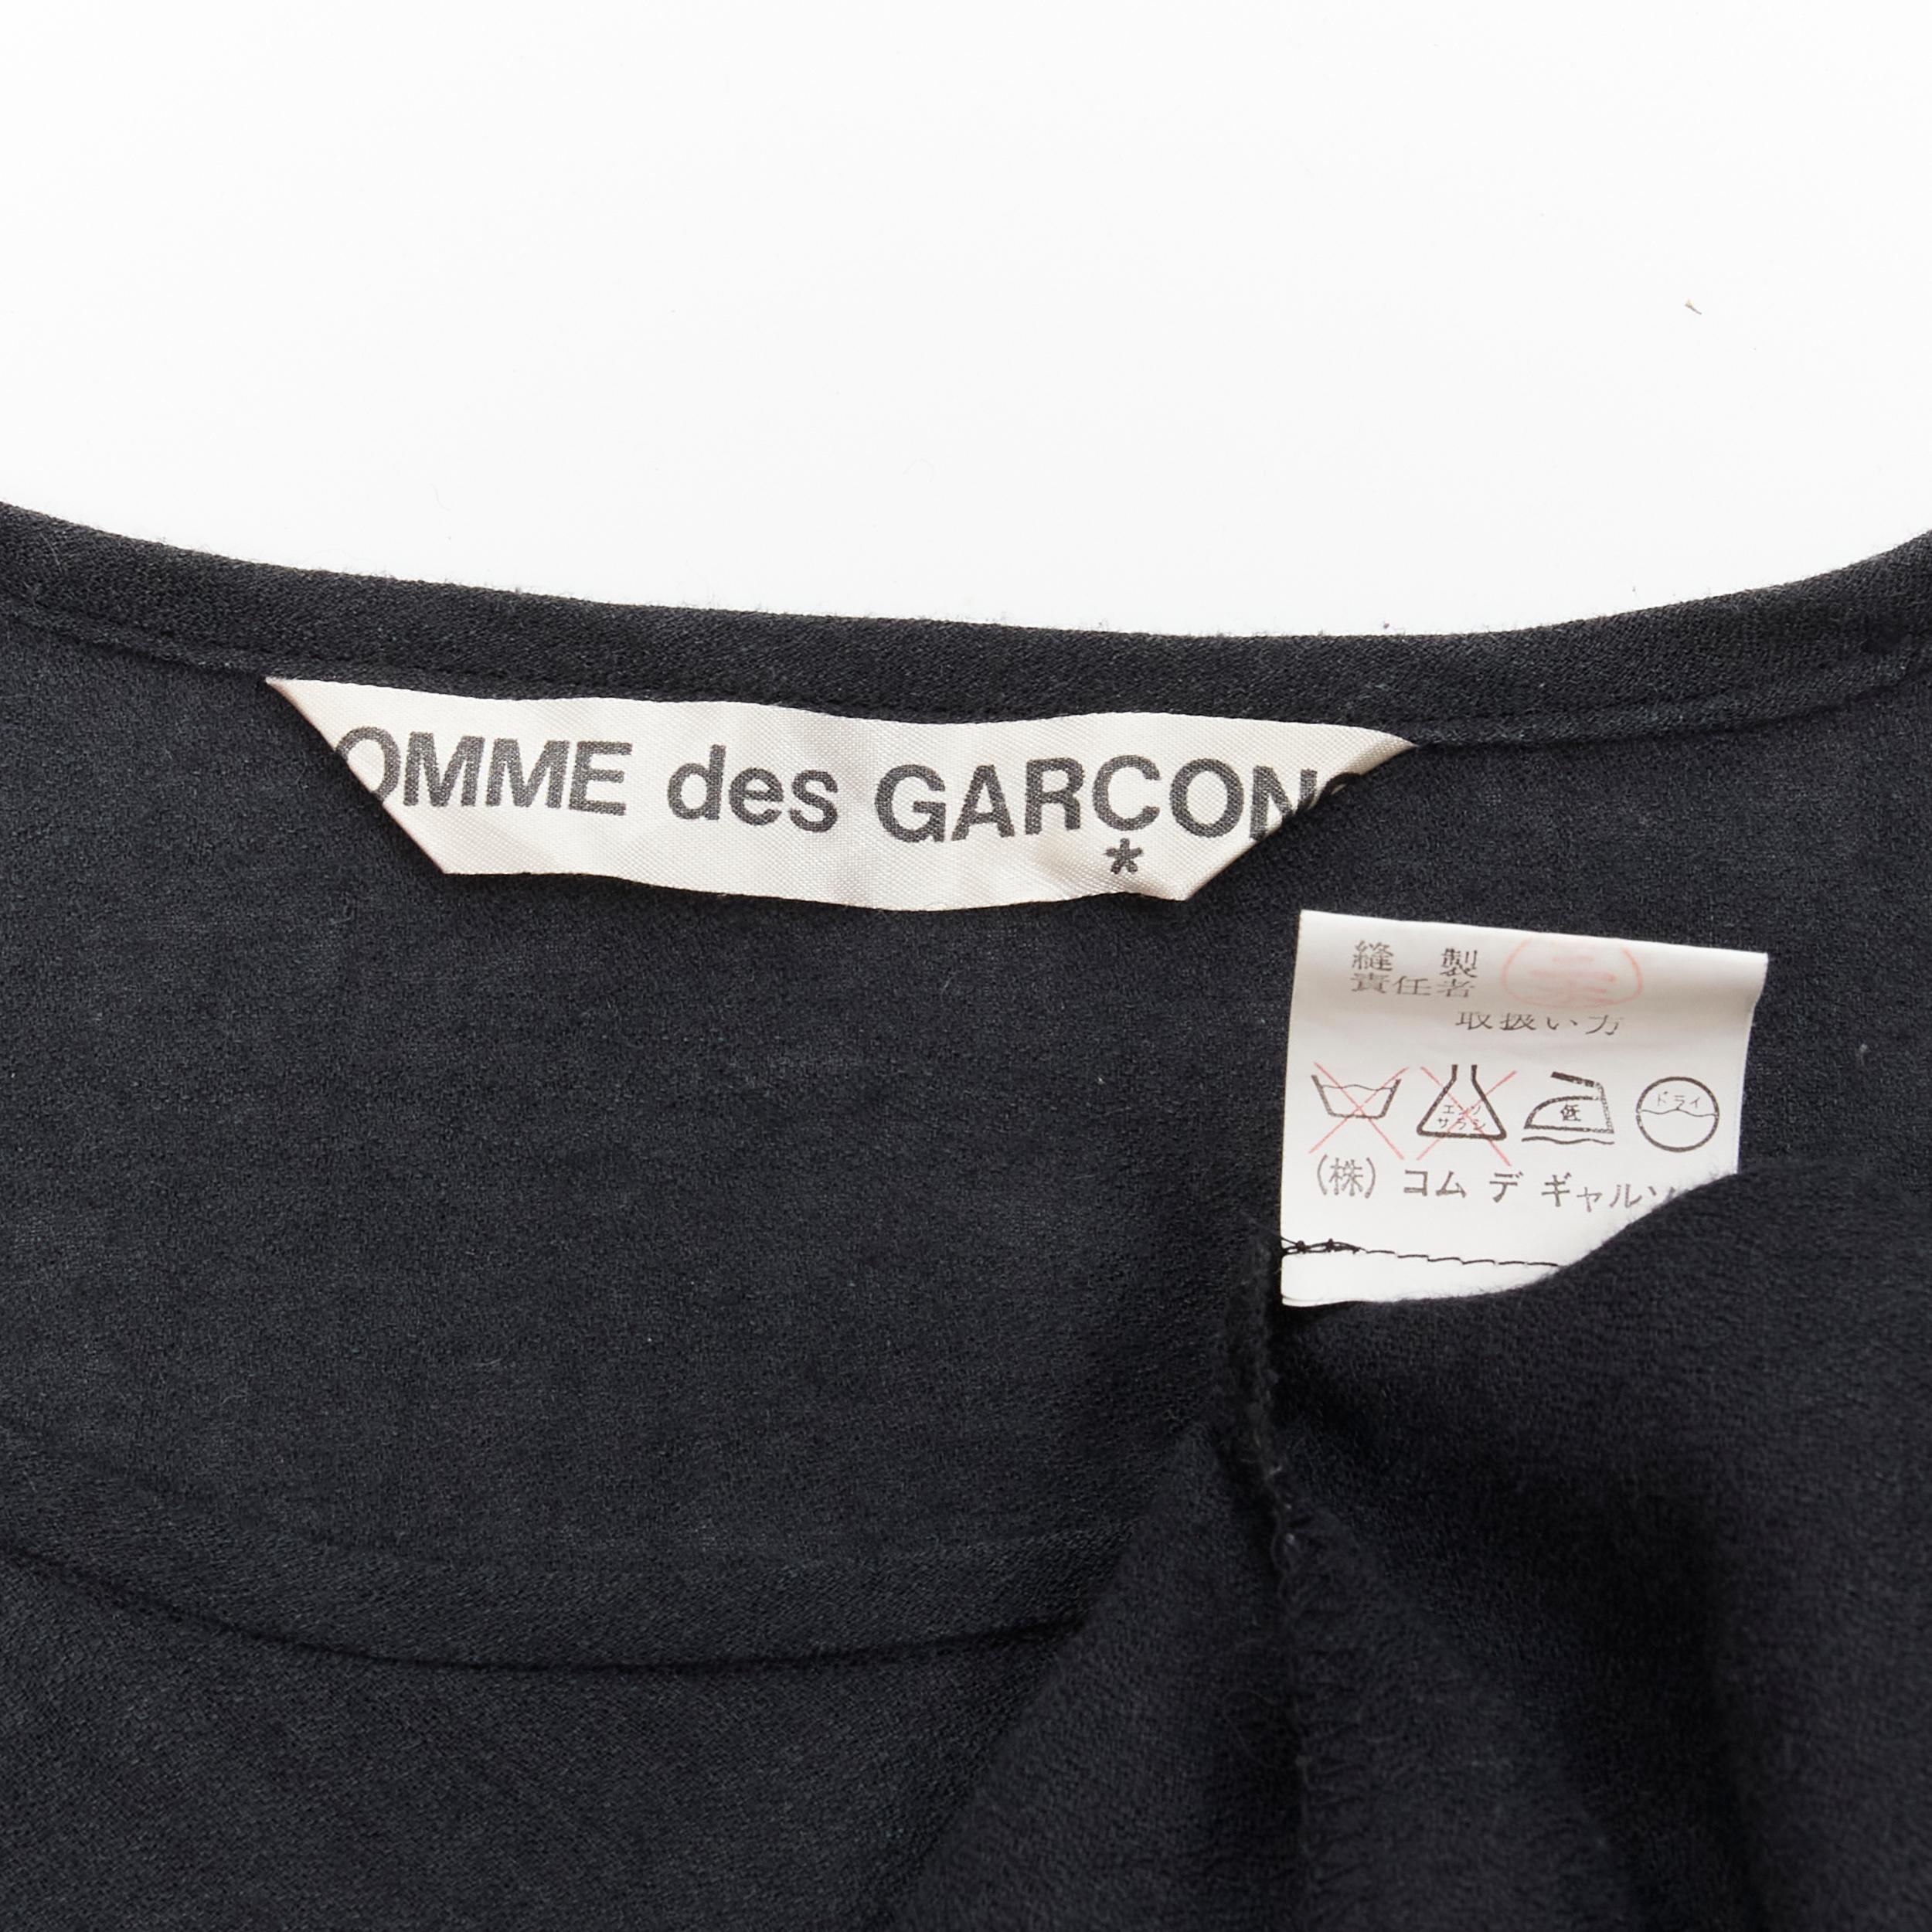 COMME DES GARCONS 1980s Vintage black linen square shorter back loose top S For Sale 4